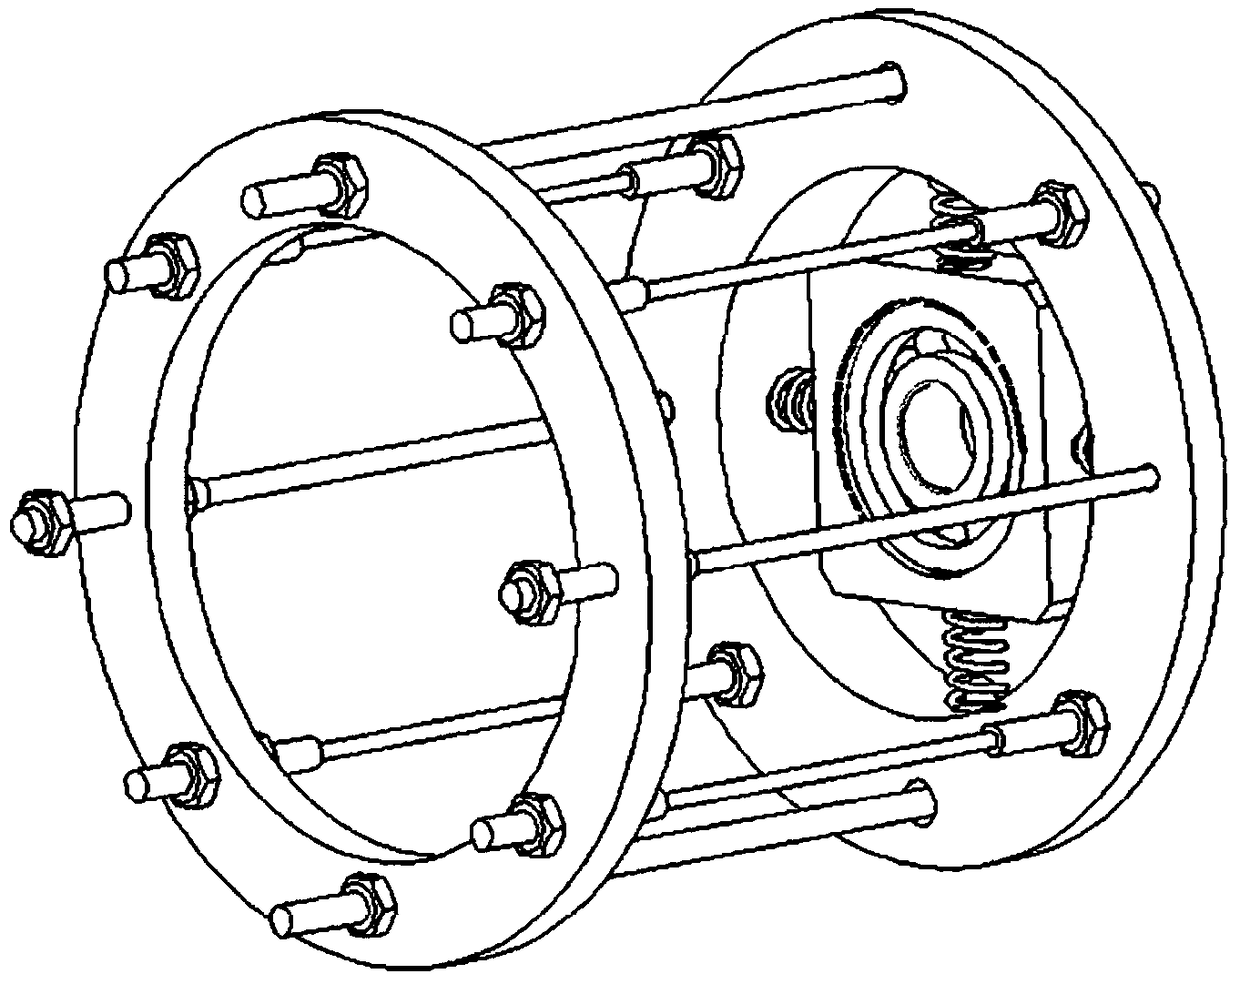 Grounding type nonlinear energy trap for restraining rotator system vibration